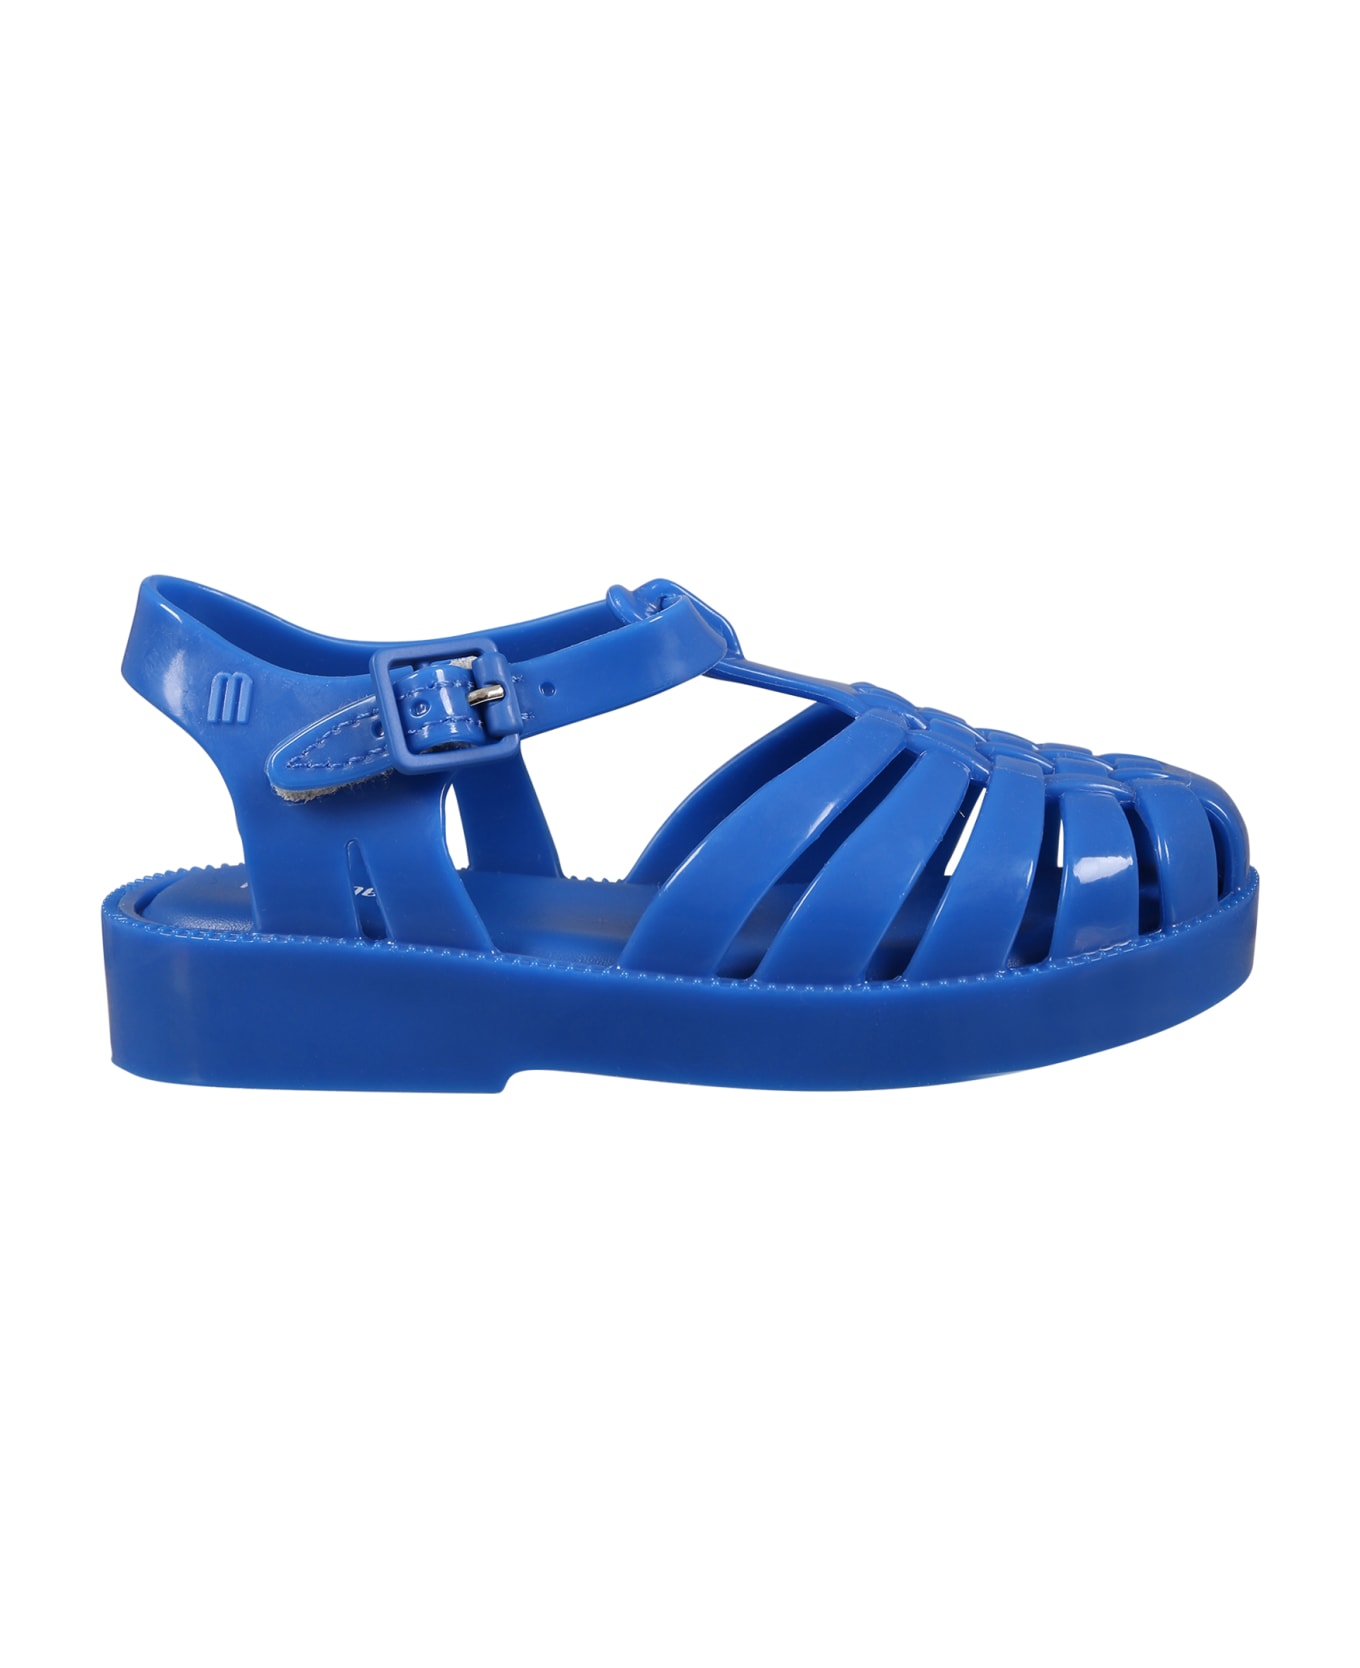 Melissa Blue Sandals For Kids With Logo - Blue